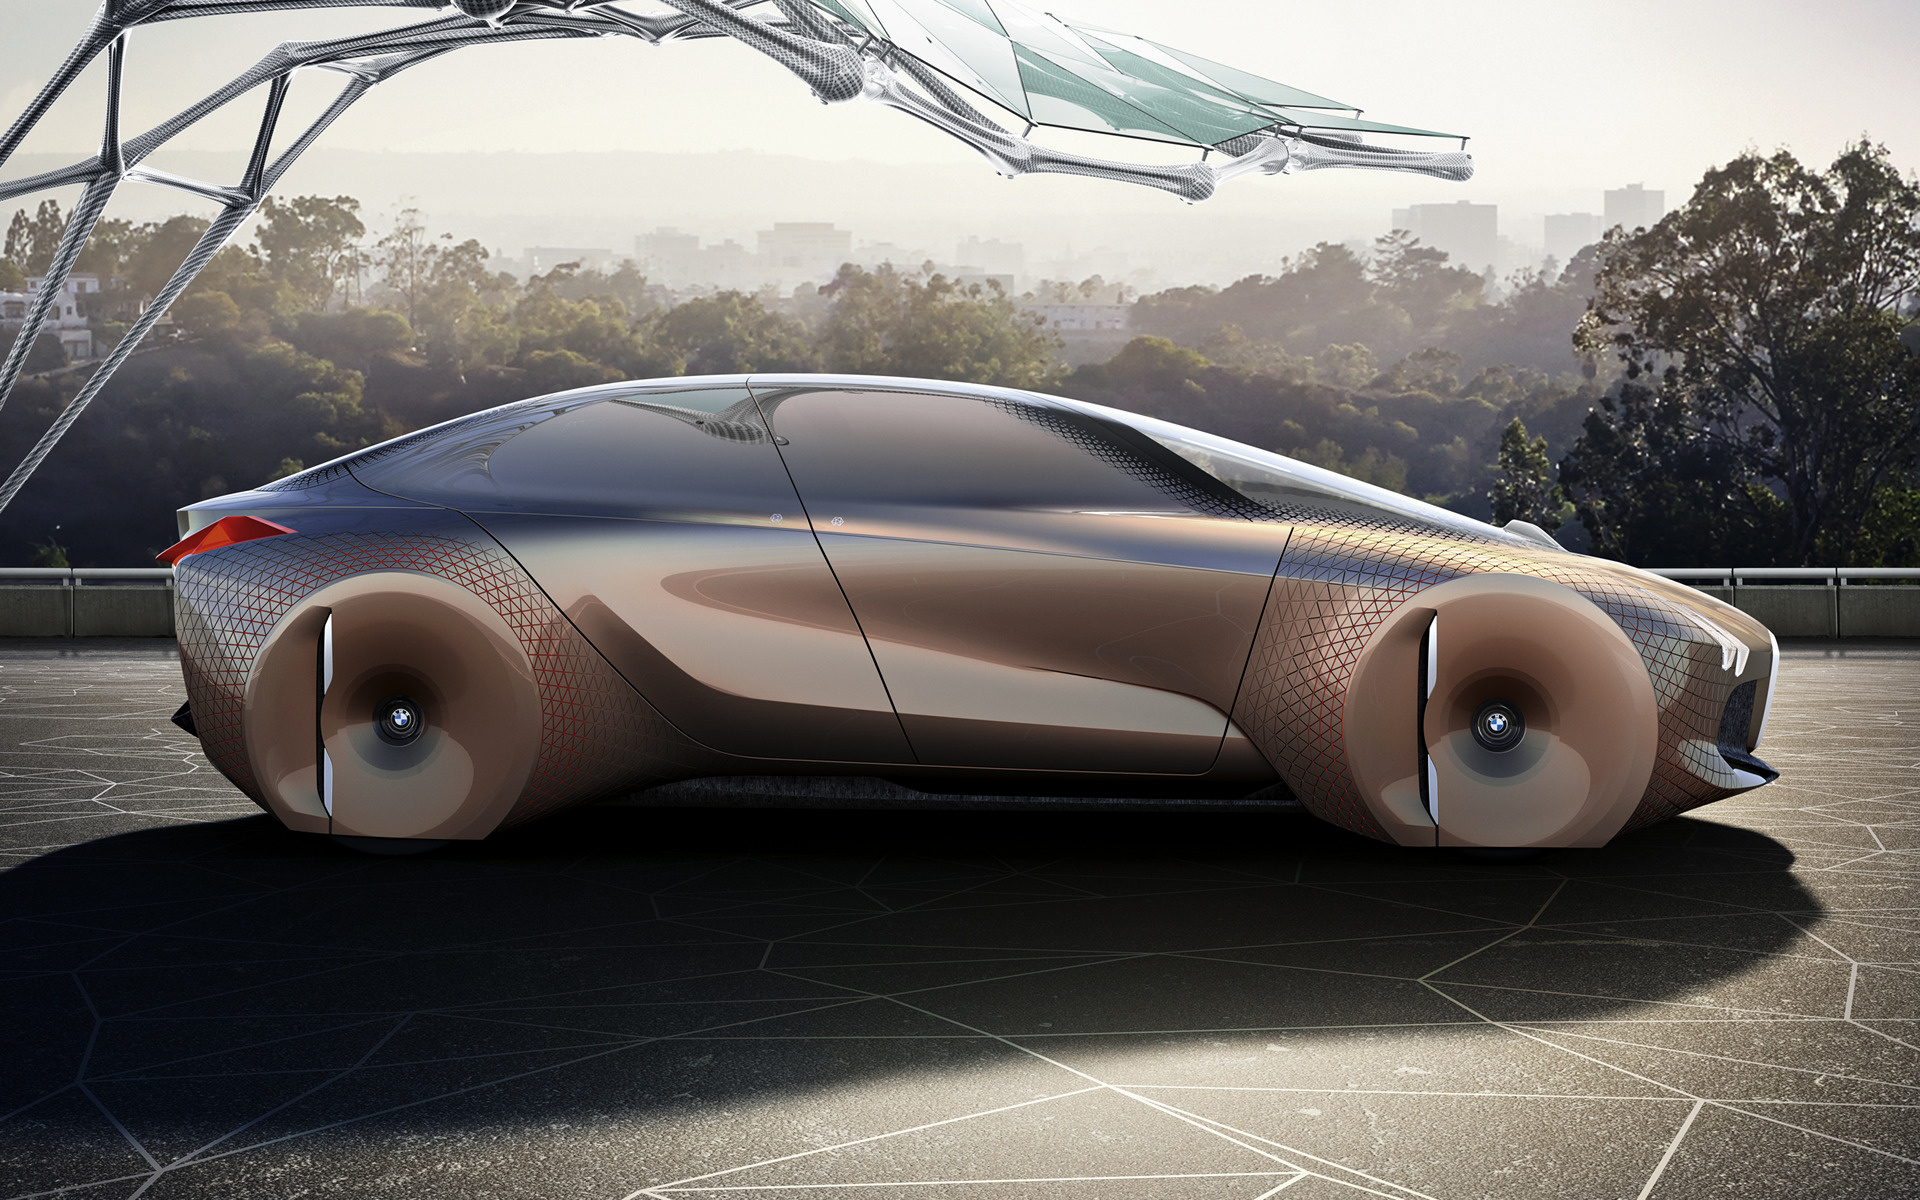 BMW Next 100: At a glance